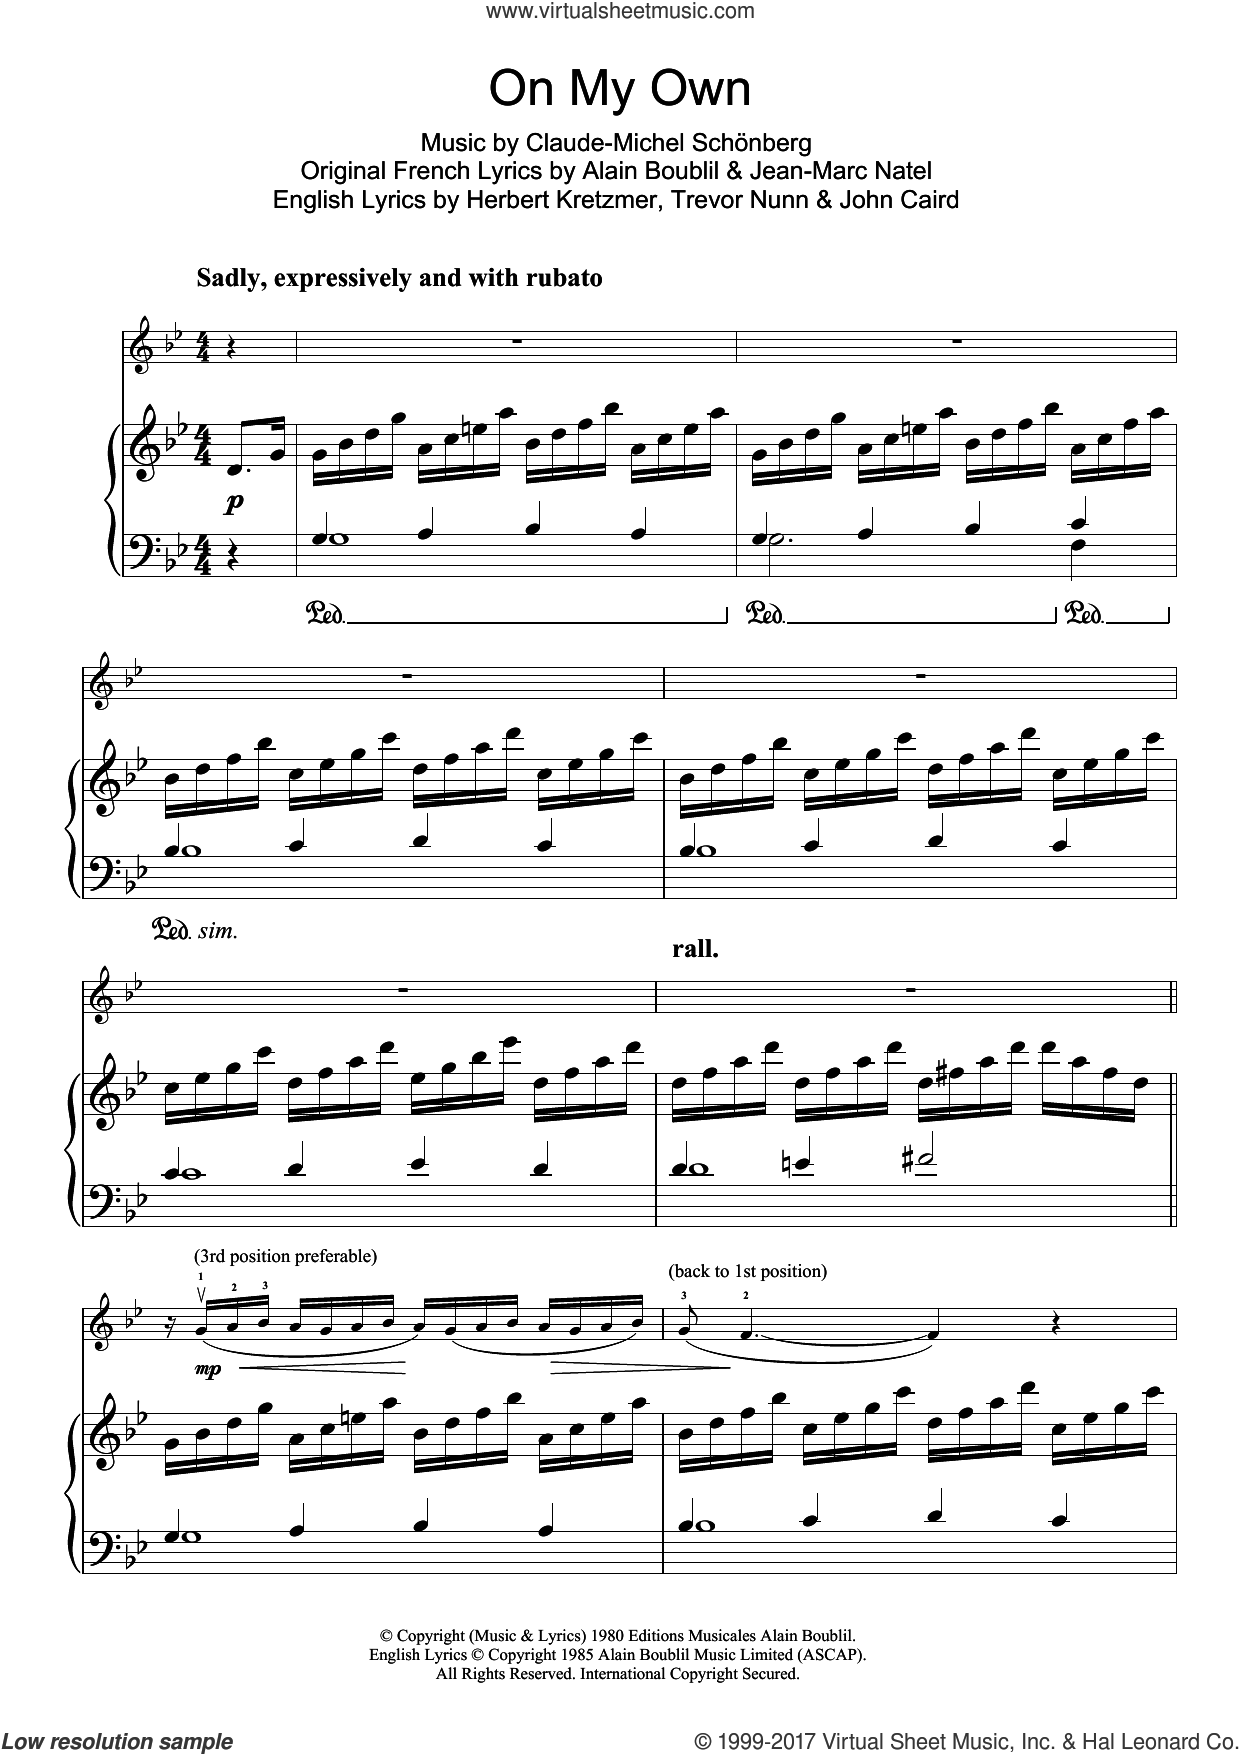 les miserables sheet music pdf